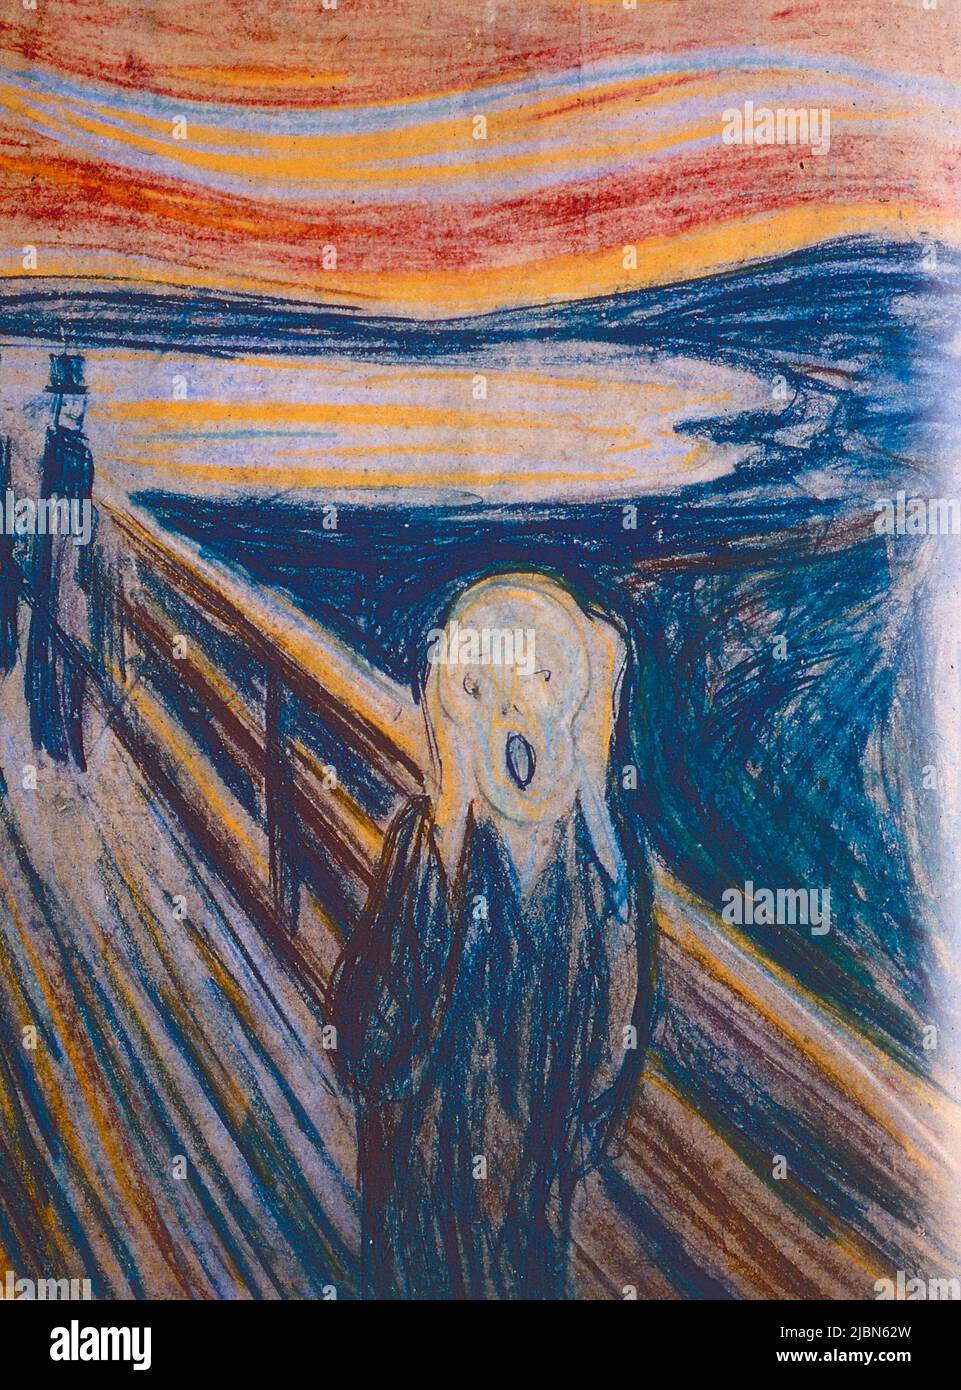 The Scream, painting by Norwegian artist Edvard Munch, 1895 Stock Photo